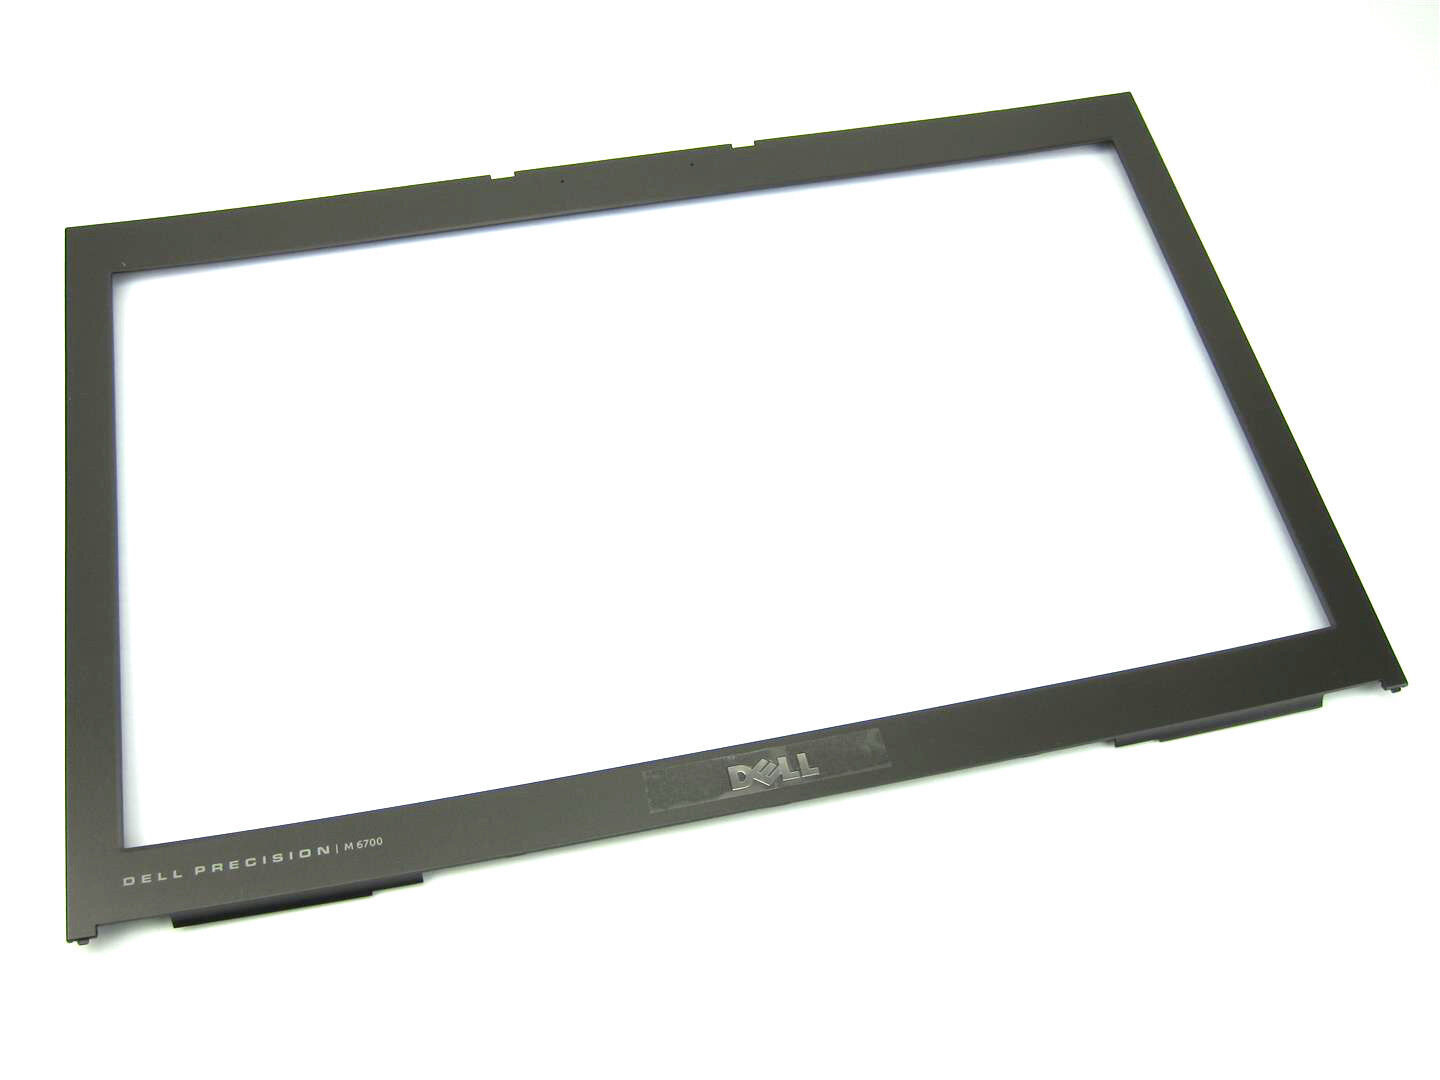 Primary image for Dell Precision M6700 17.3" LCD Front Trim Bezel No Web Camera Window - GKWKP (U)